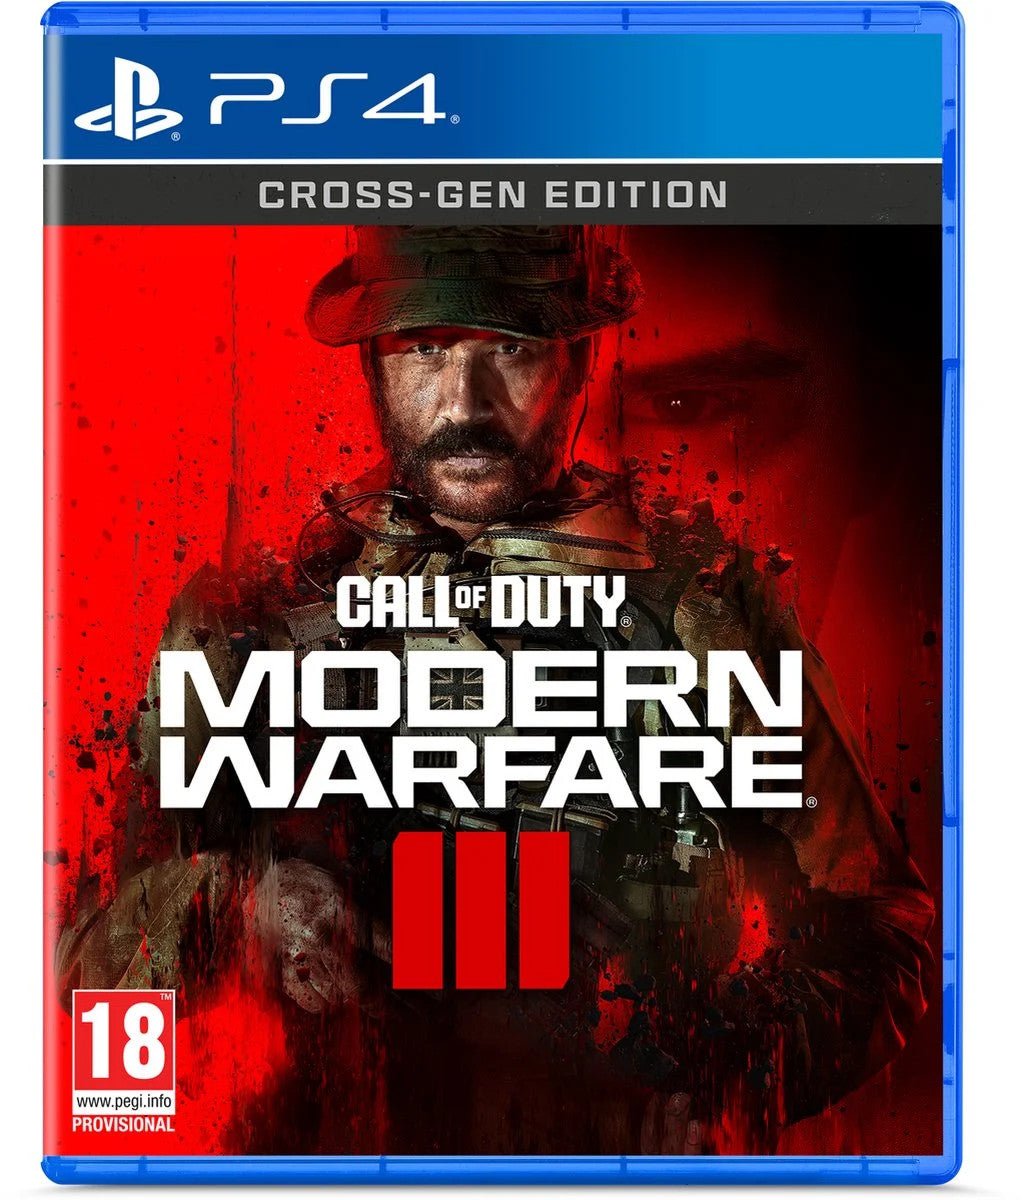 PS4 Call OF Duty Modern Warfare 3 eu - Level UpSonyPlaystation Video Games92590